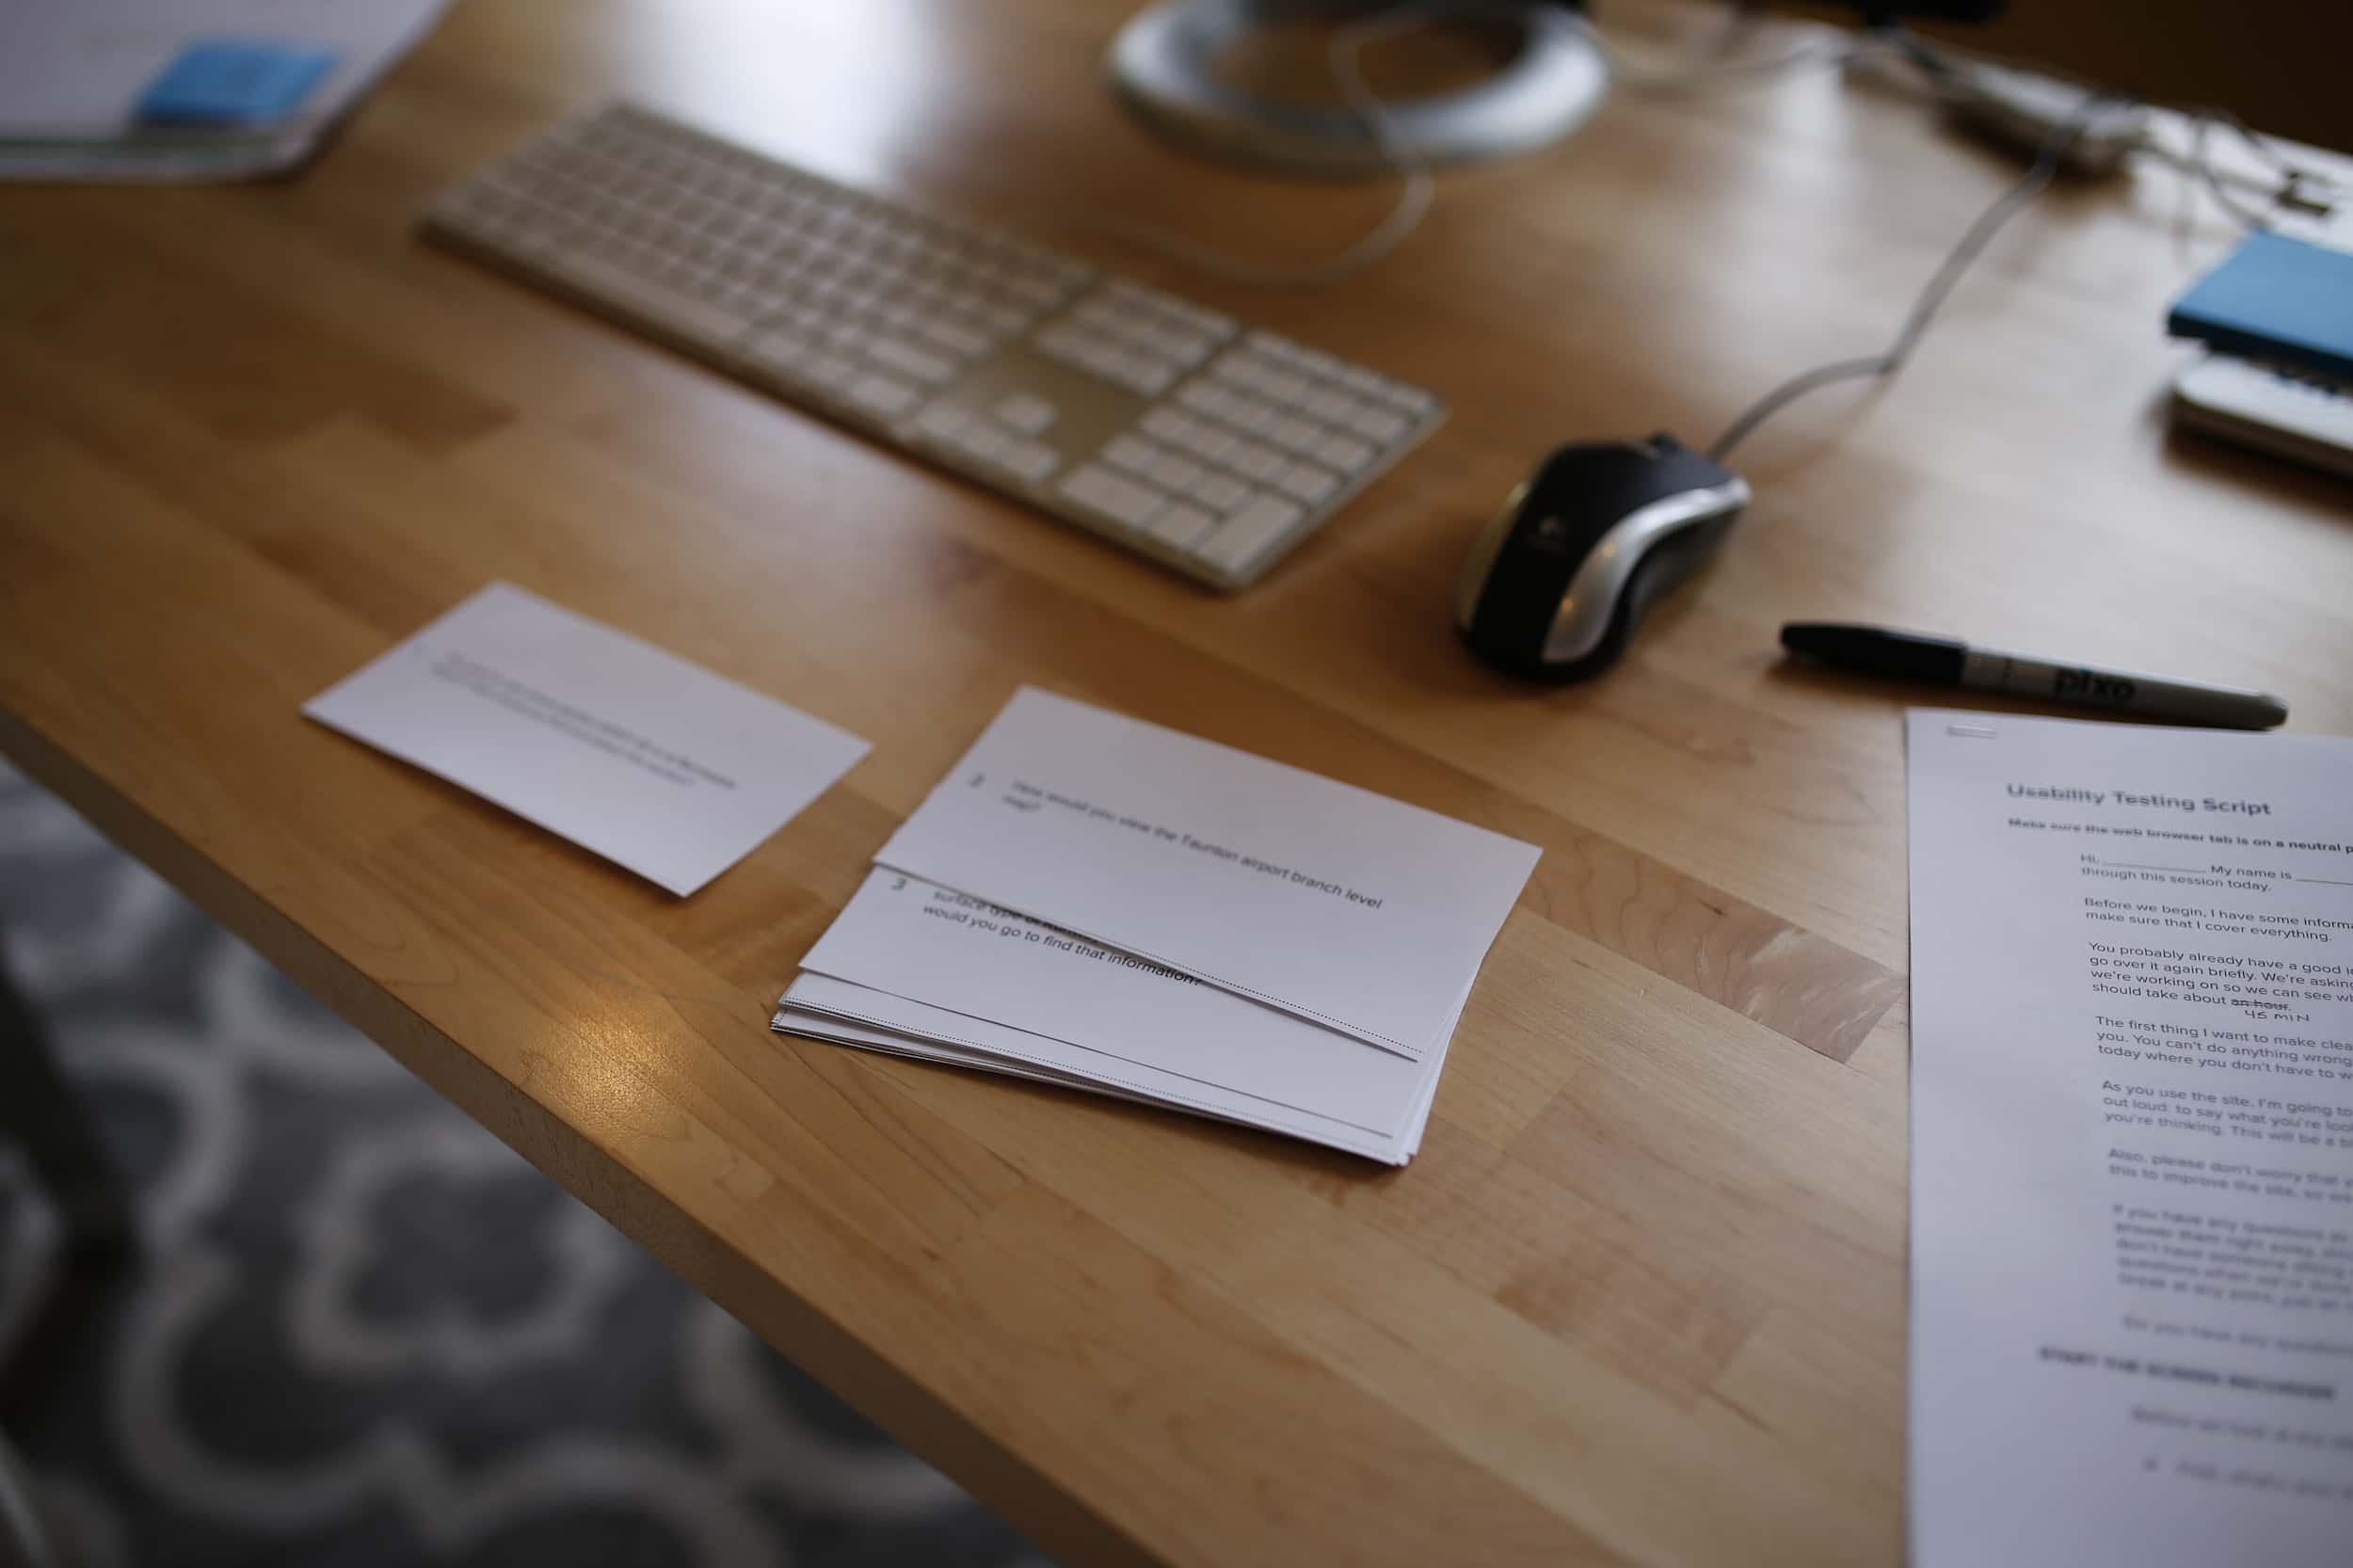 Slips of paper arranged on a desk